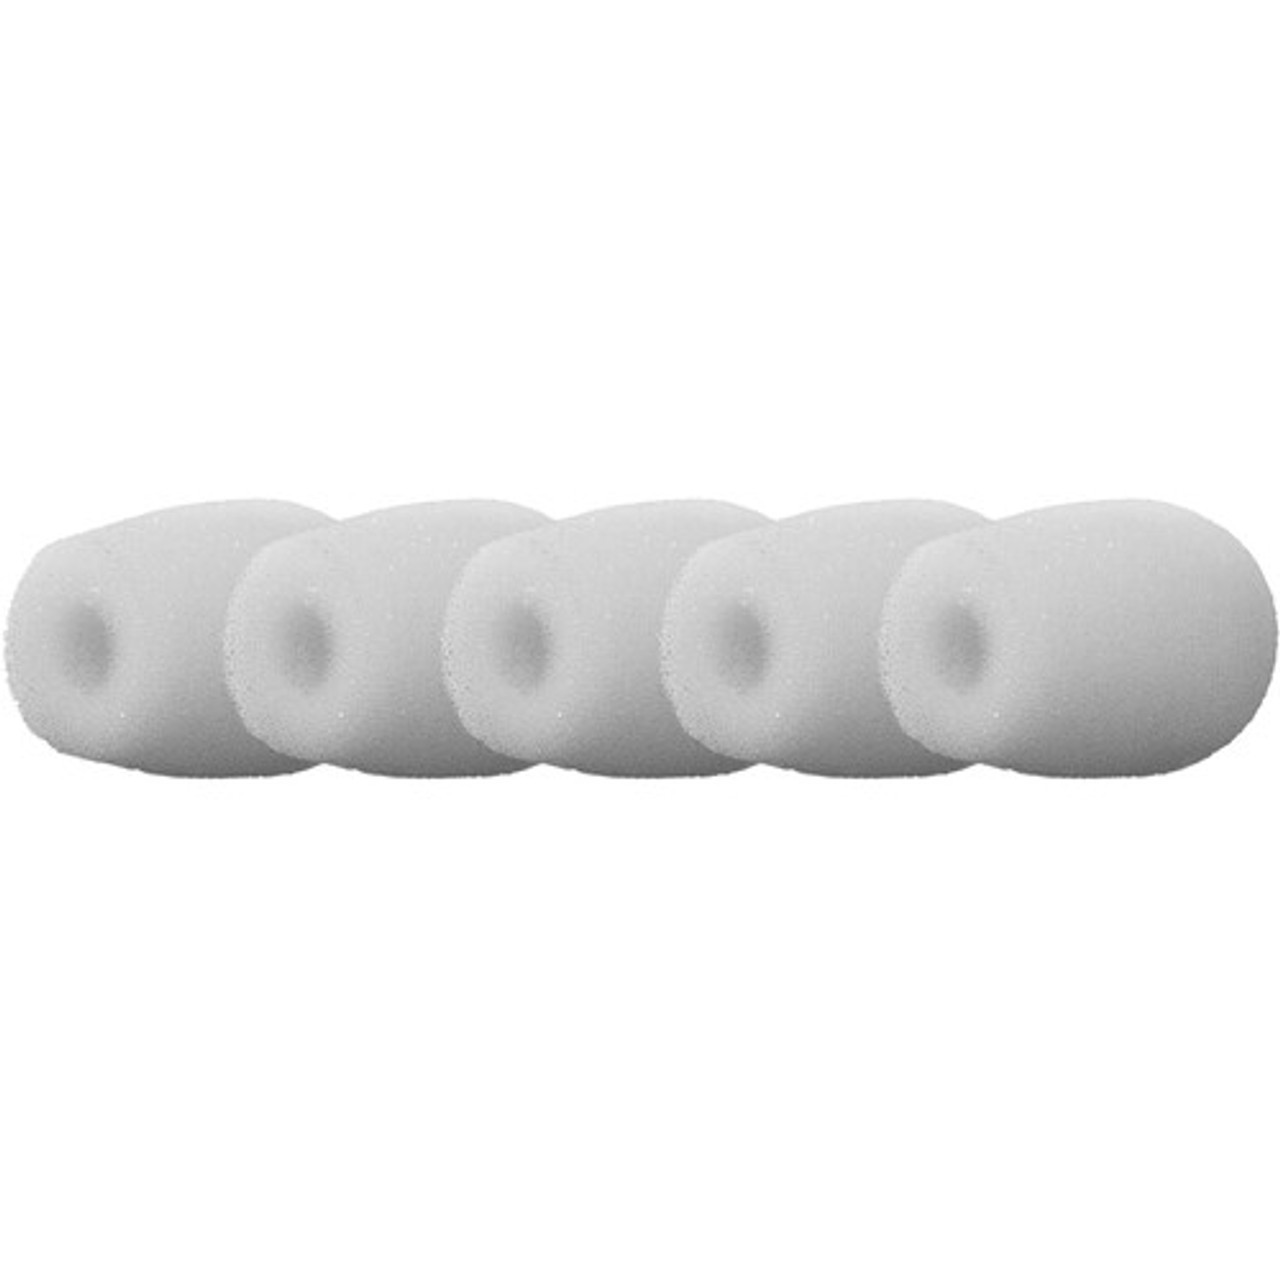 Audix WS20WPK Foam Windscreen For ADX40/Micro-D Mics/Ball-Shape 5-Pack White